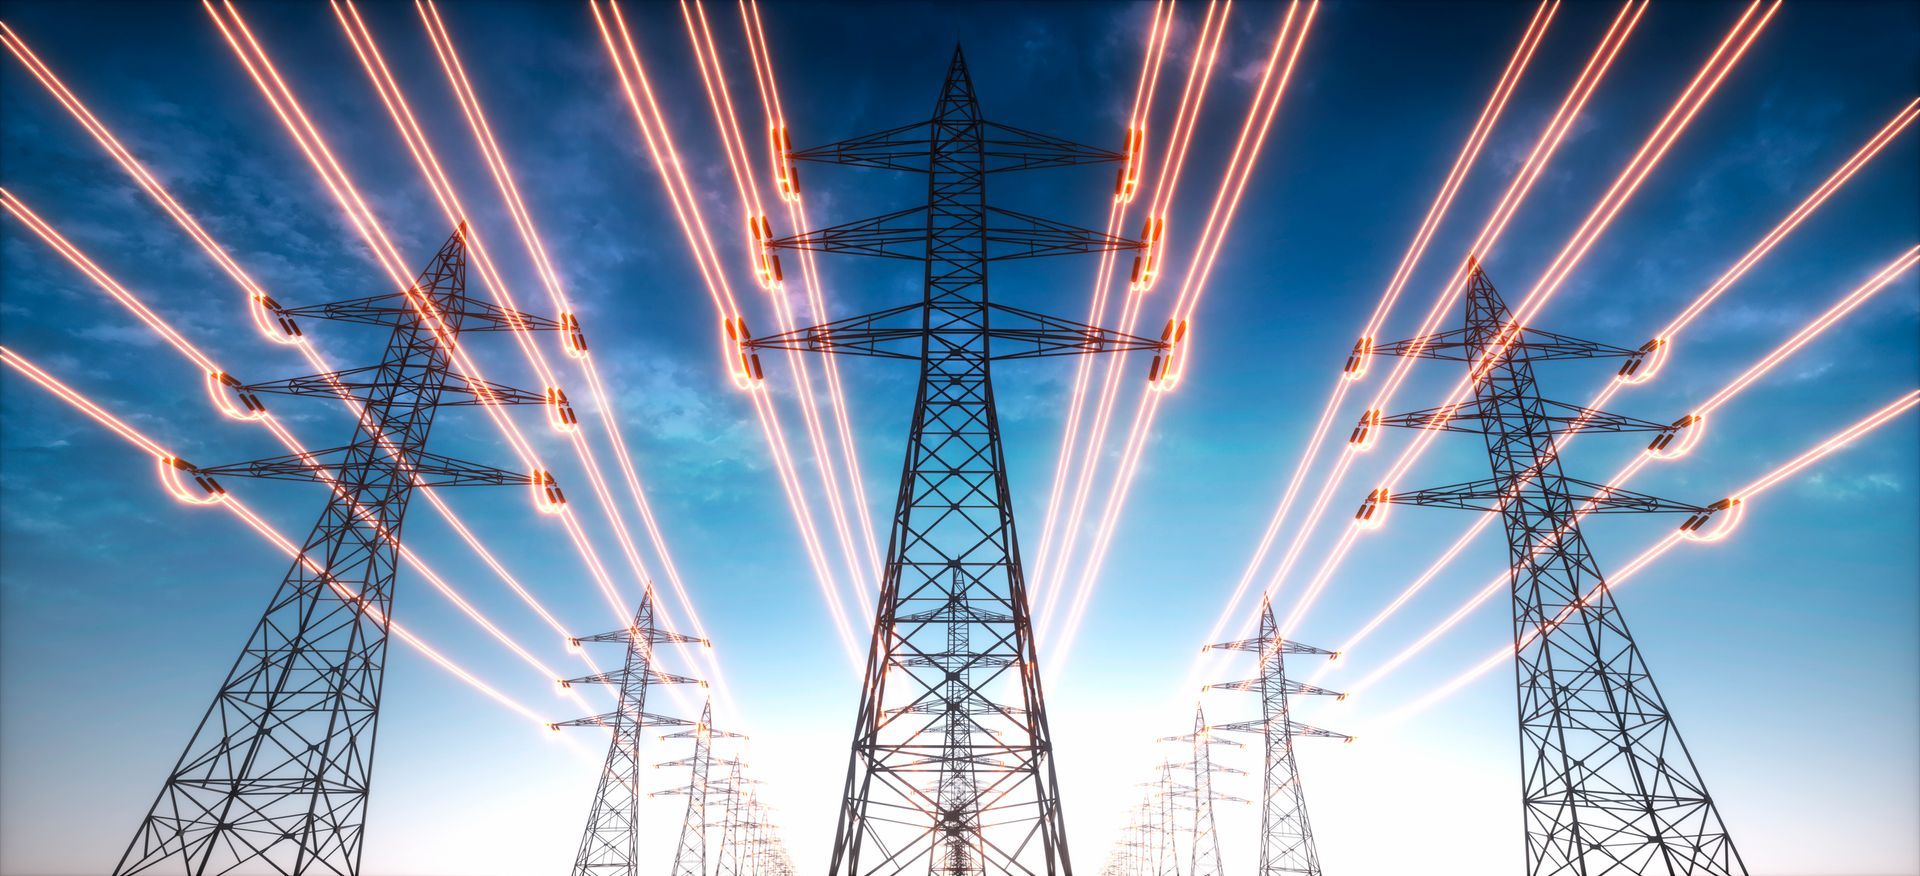 A row of power lines against a blue sky